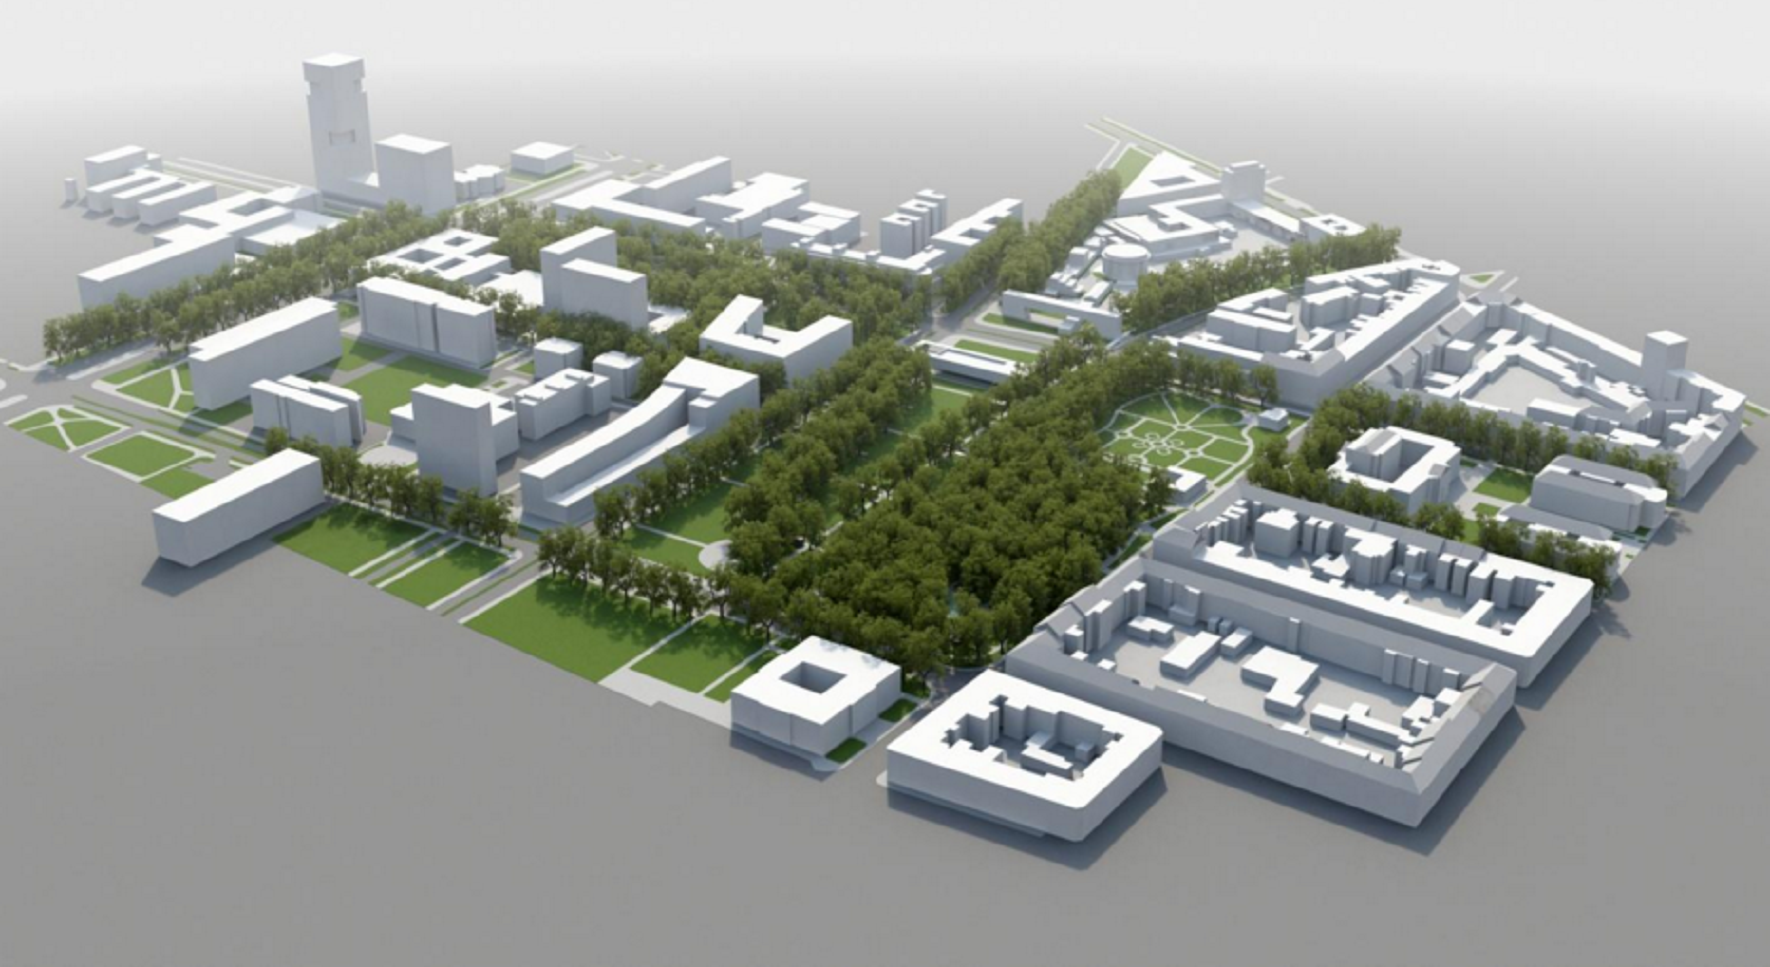 FER-Integrirani grad II.-Urbanističko arhitektonska analiza dijela prostora Sveučilišne aleje s analizom kompleksa FER-a, 2013.